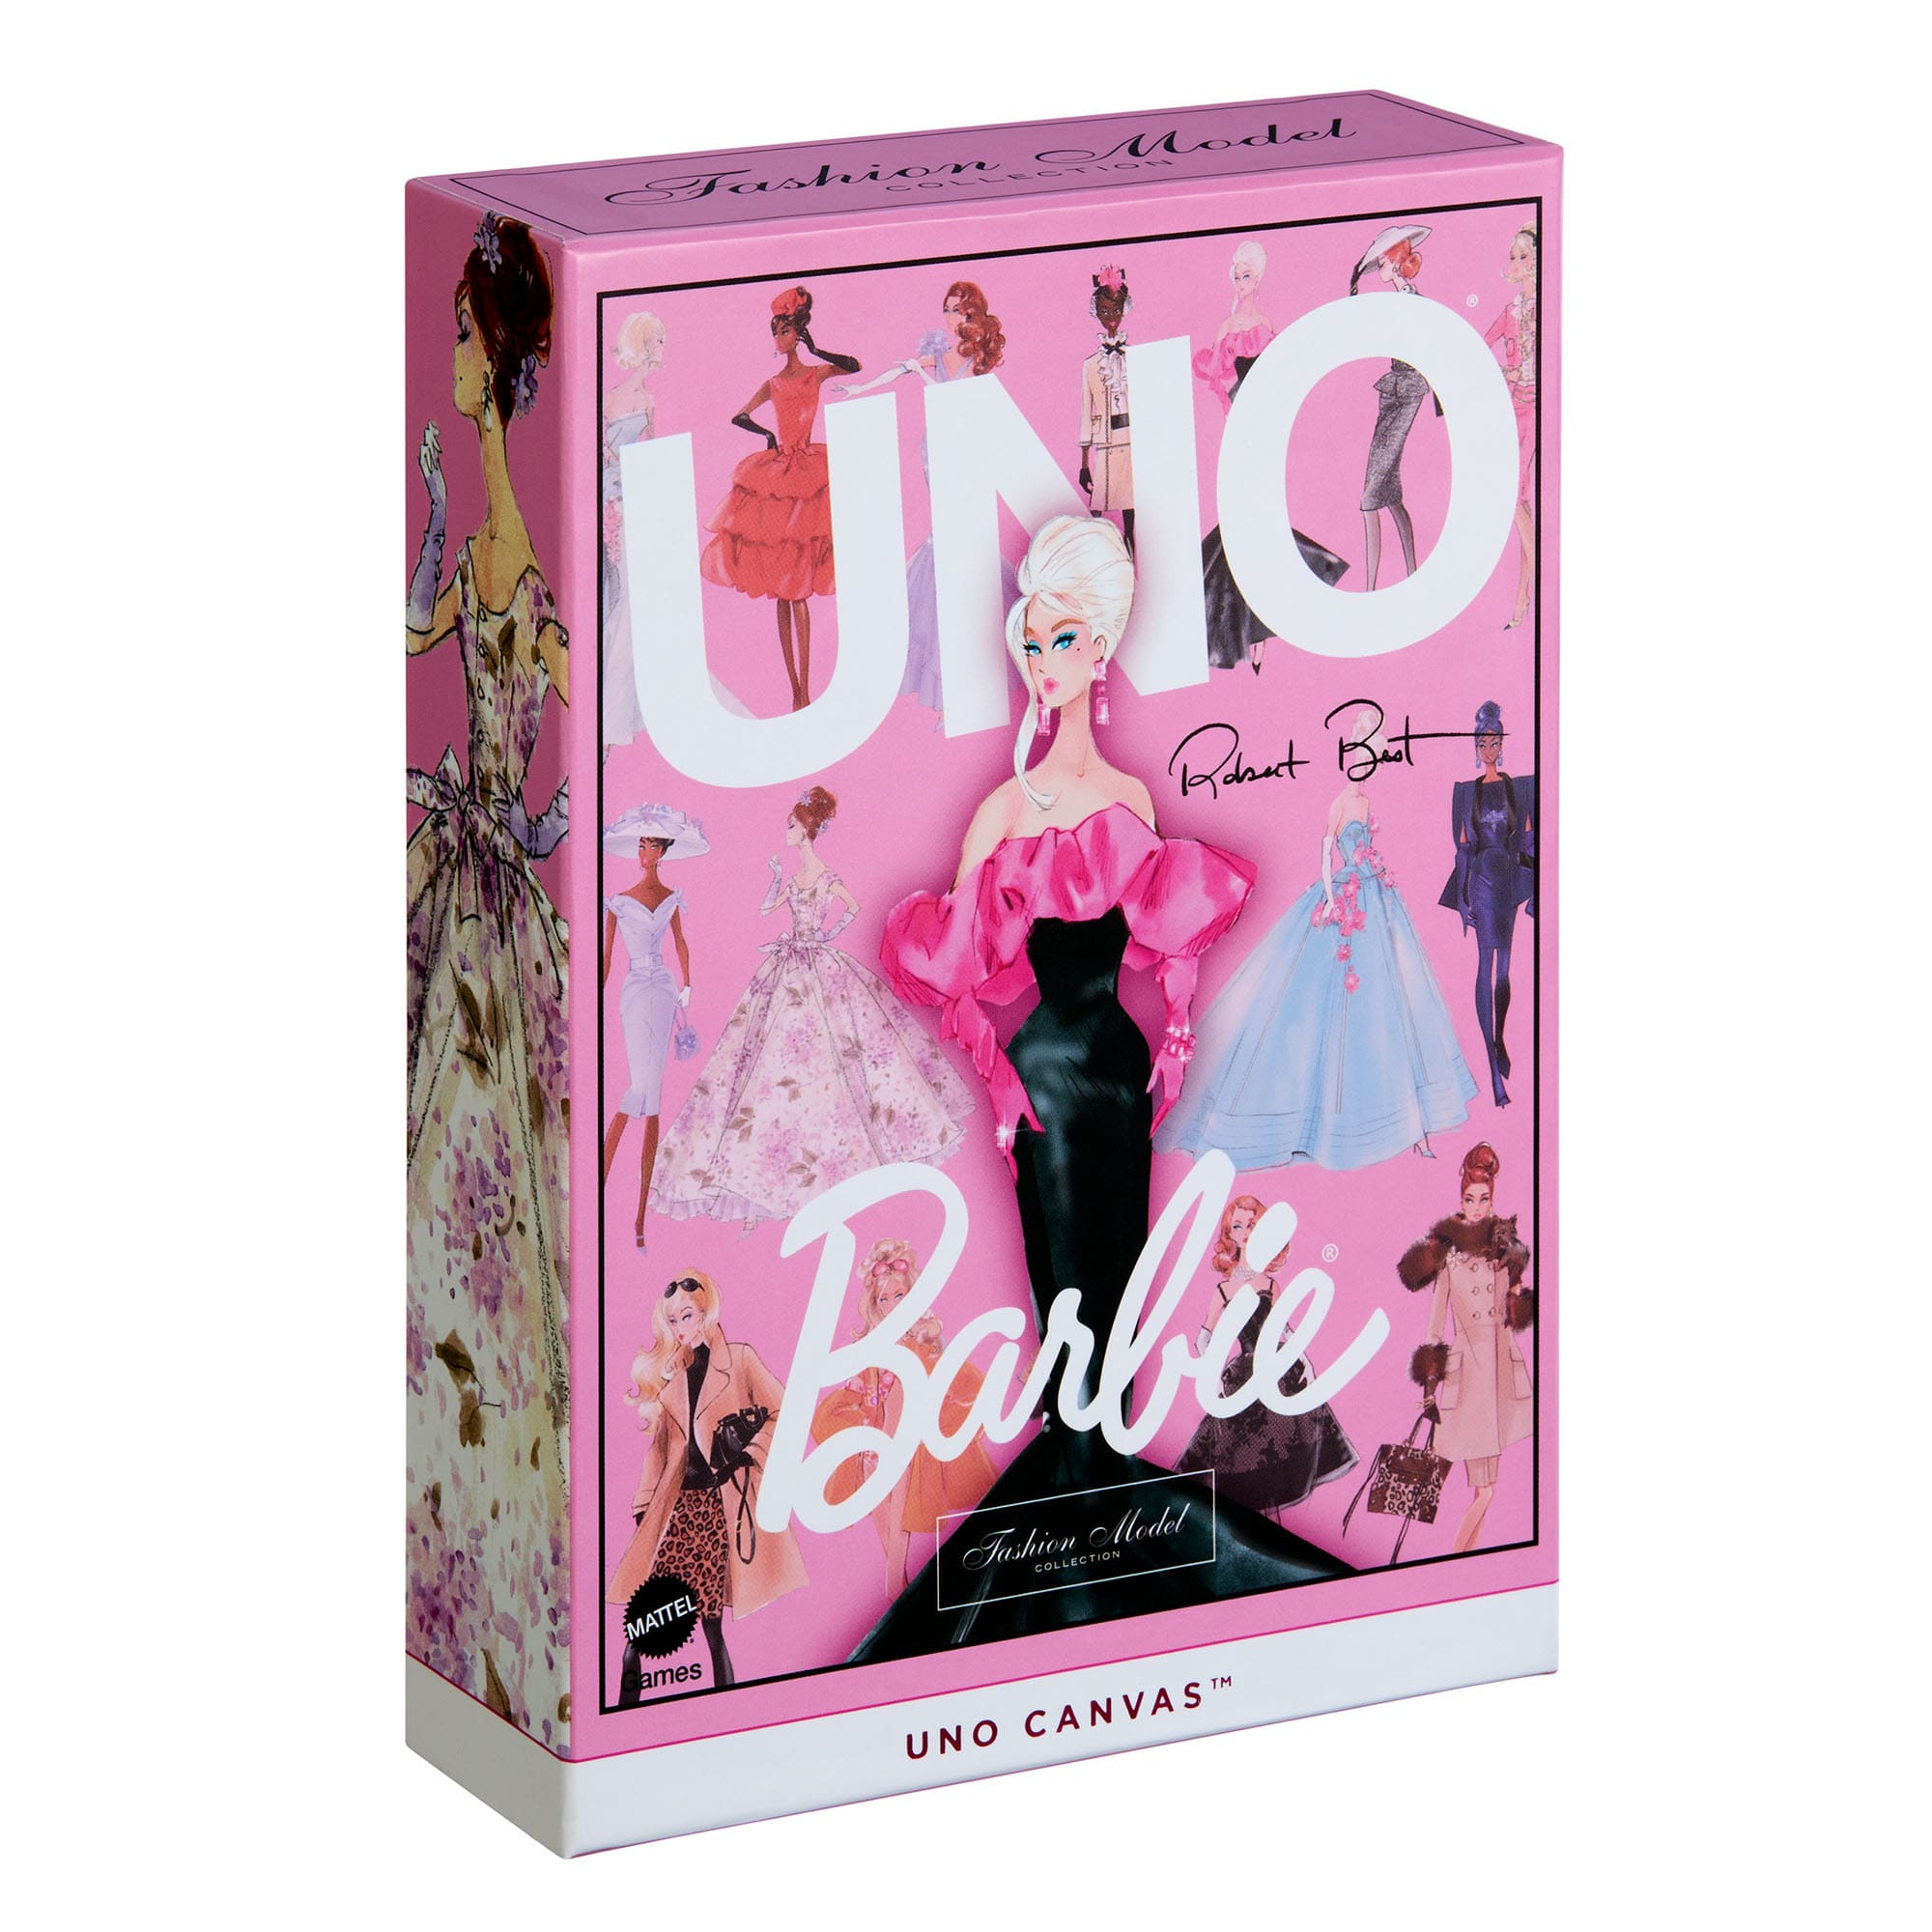 UNO Canvas Barbie Fashion Model Collection Deck